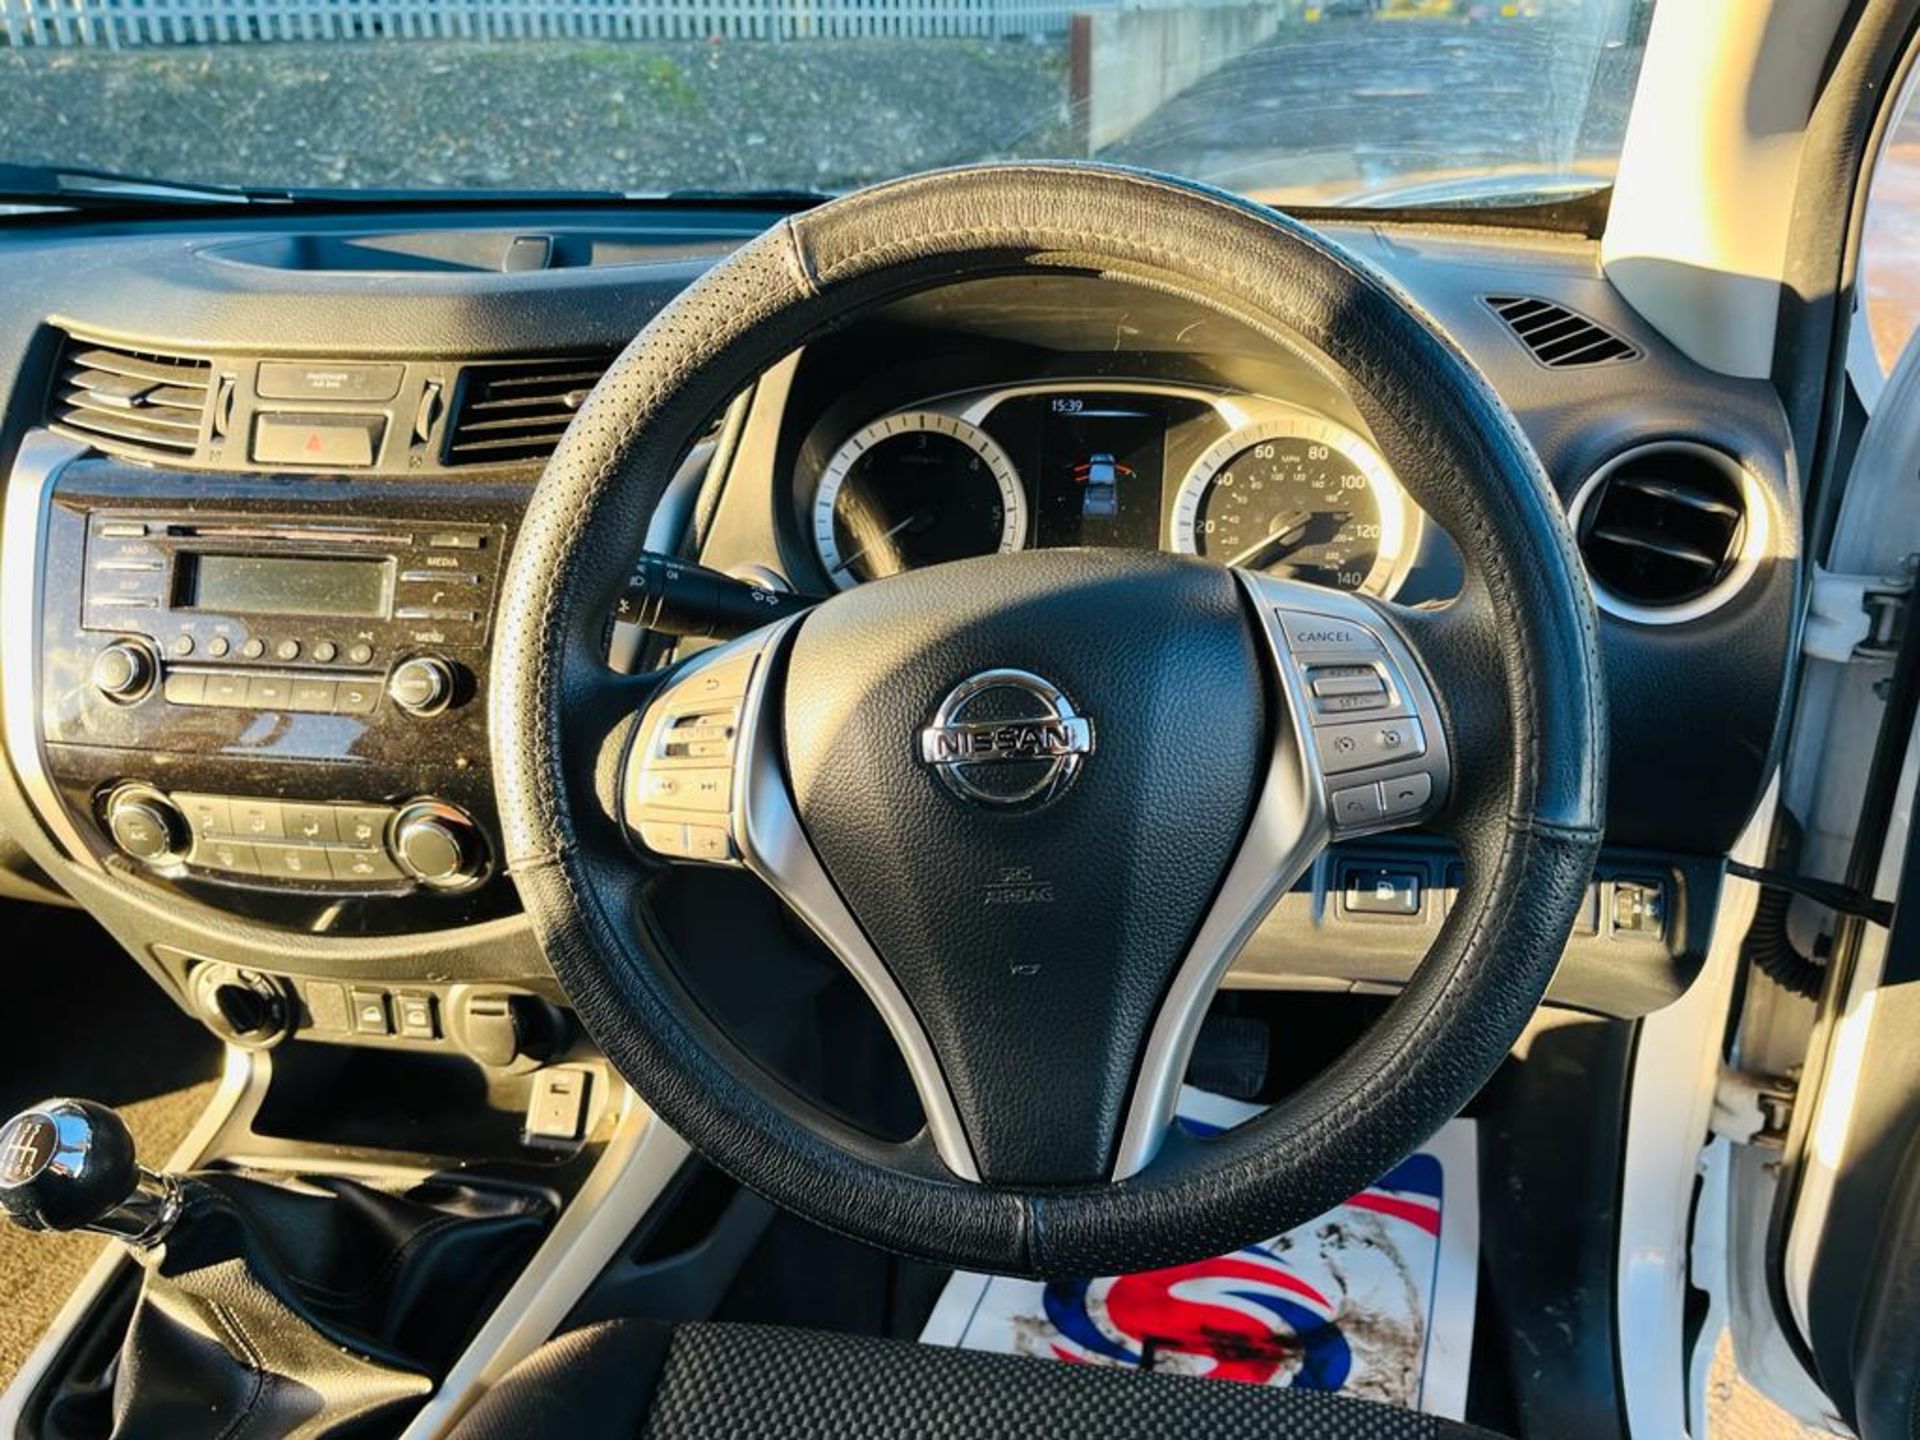 ** ON SALE ** Nissan Navara 2.3 DCI 163 Acenta CrewCab 4WD Pickup 2019 '19 Reg' ULEZ Compliant - Image 17 of 34